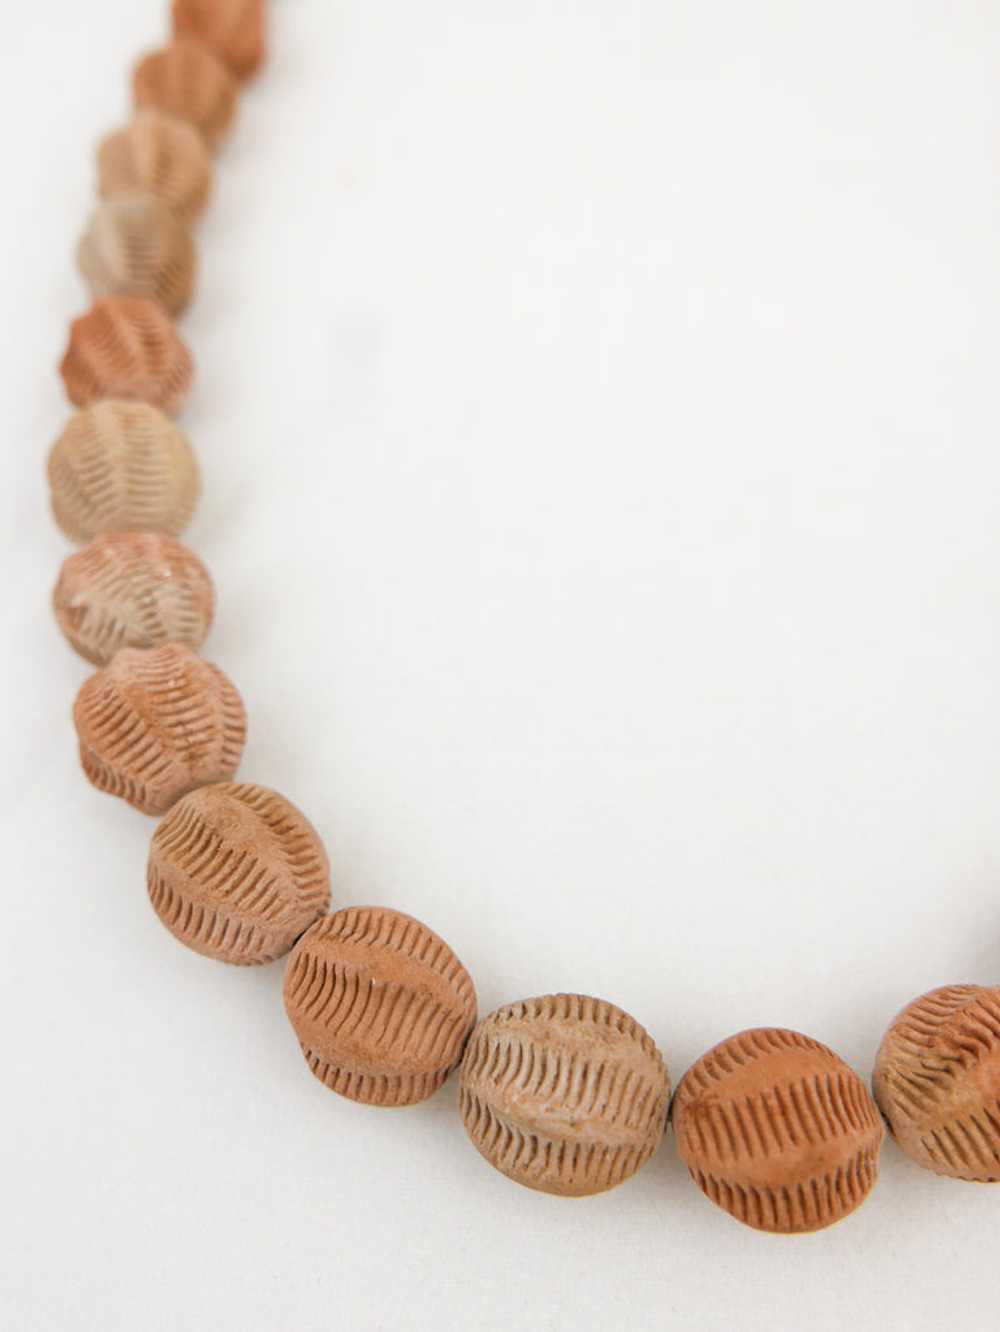 Handmade Clay Bead Necklace - image 2